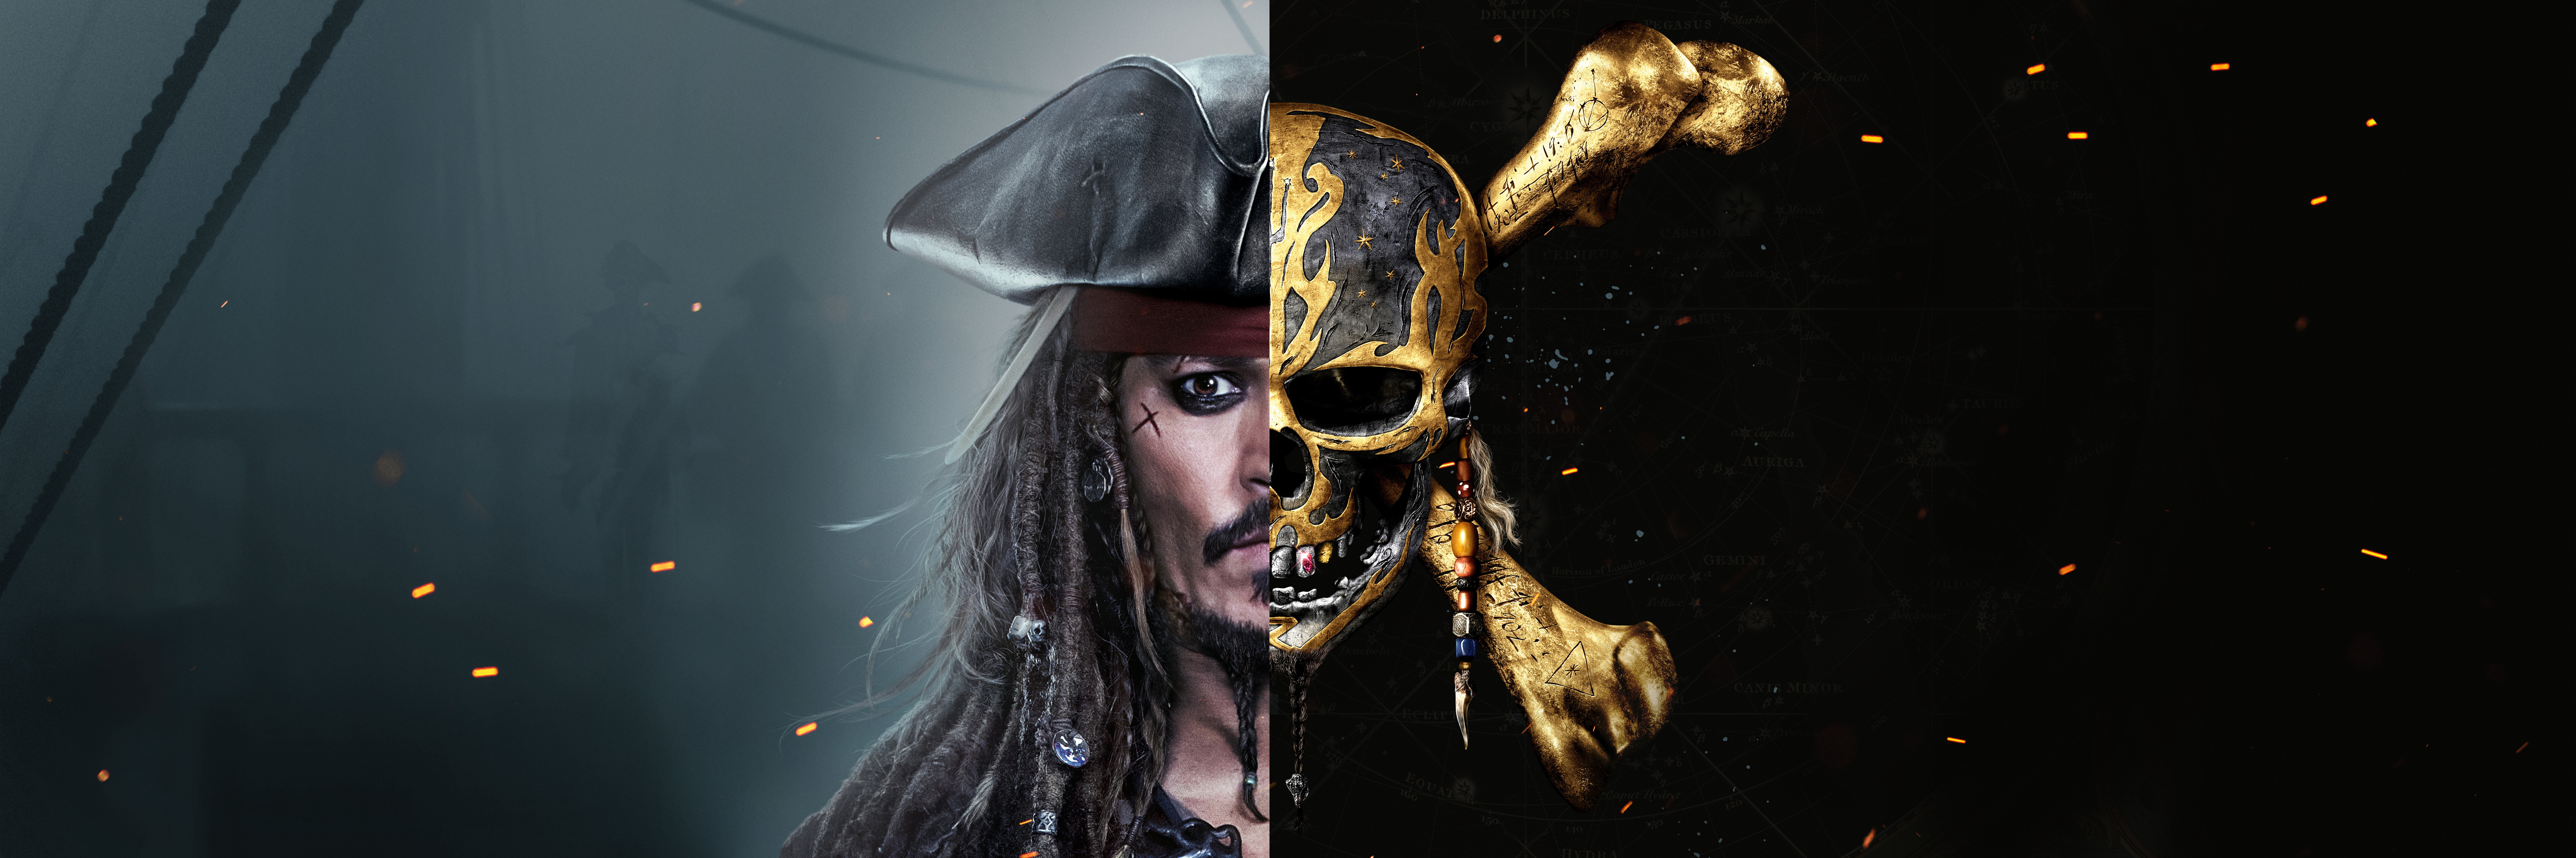 70+ 4K Jack Sparrow Wallpapers | Background Images